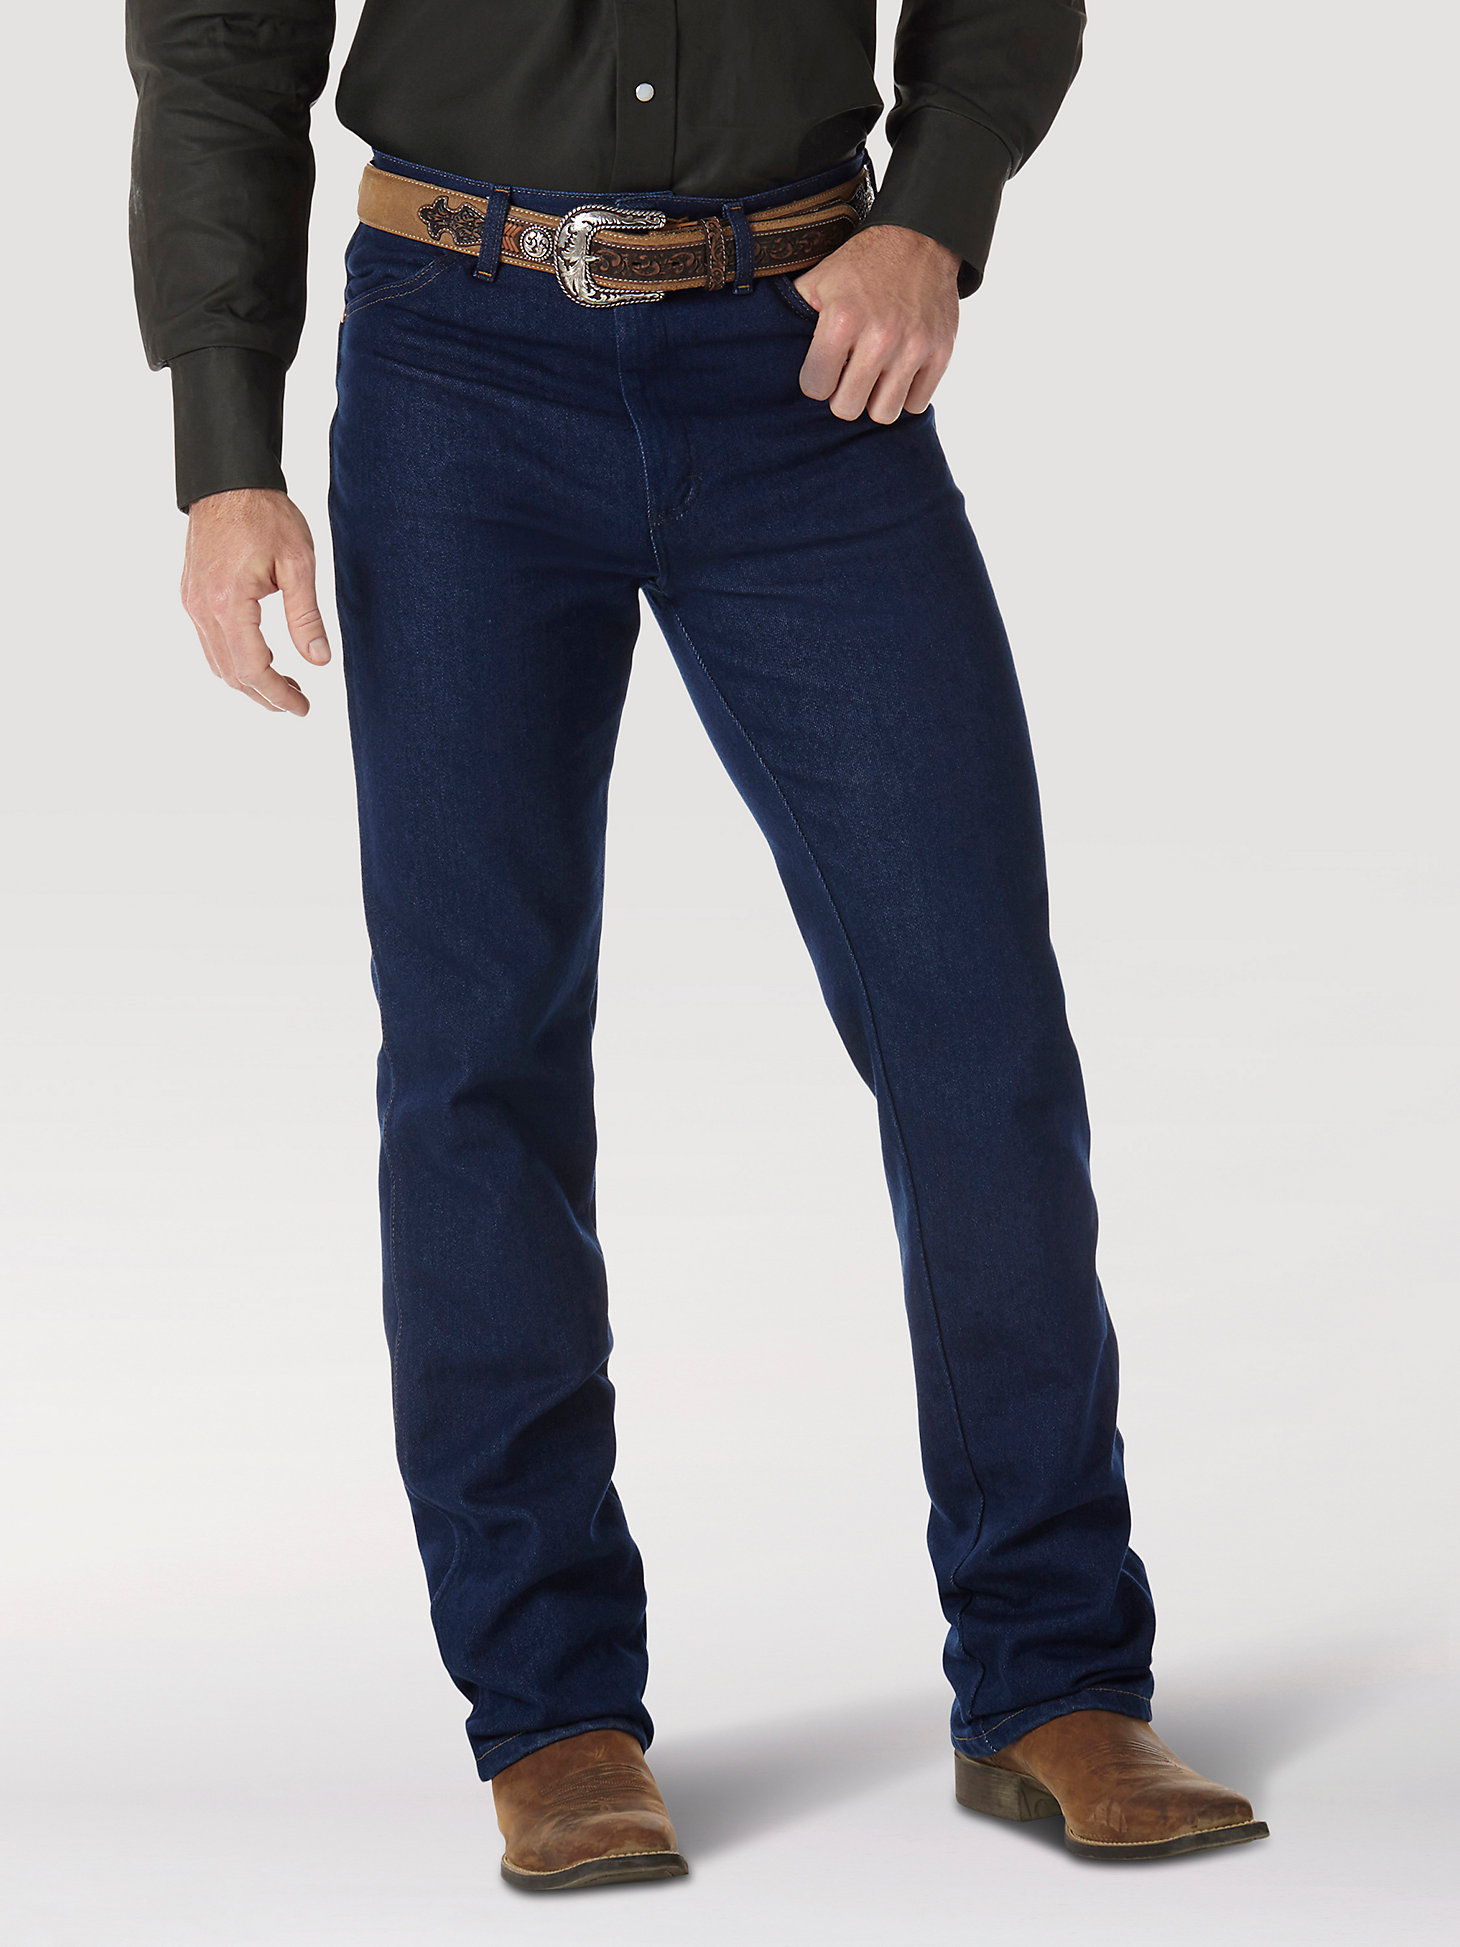 Wrangler® Cowboy Cut® Stretch Slim Fit Jean in Indigo Stretch main view